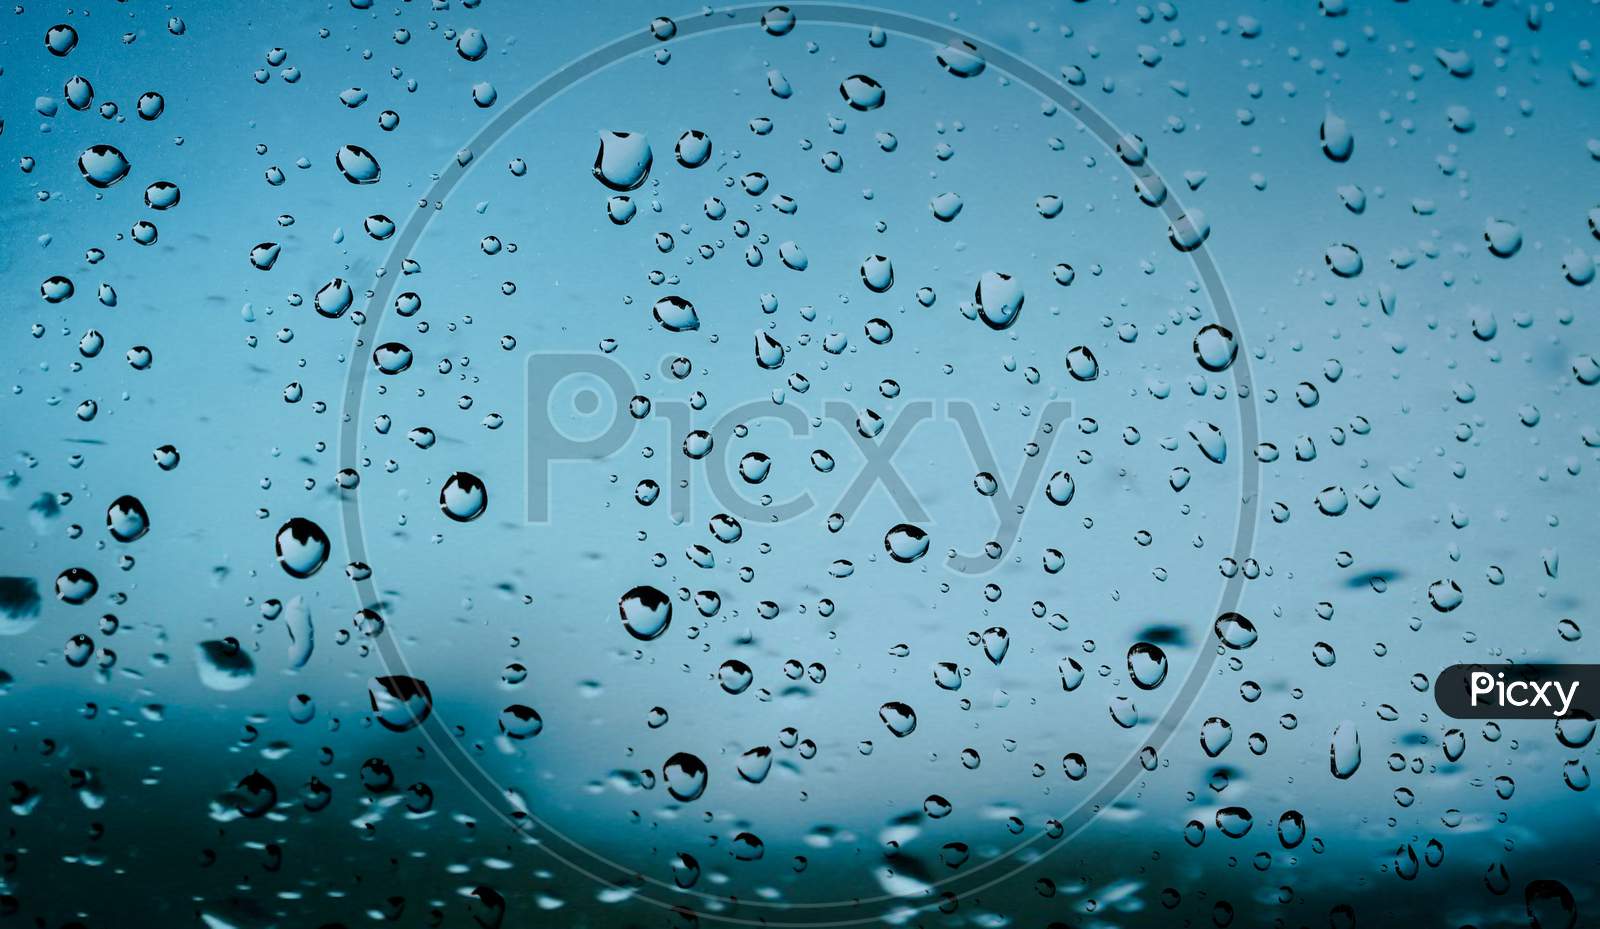 Rain drops on window glass